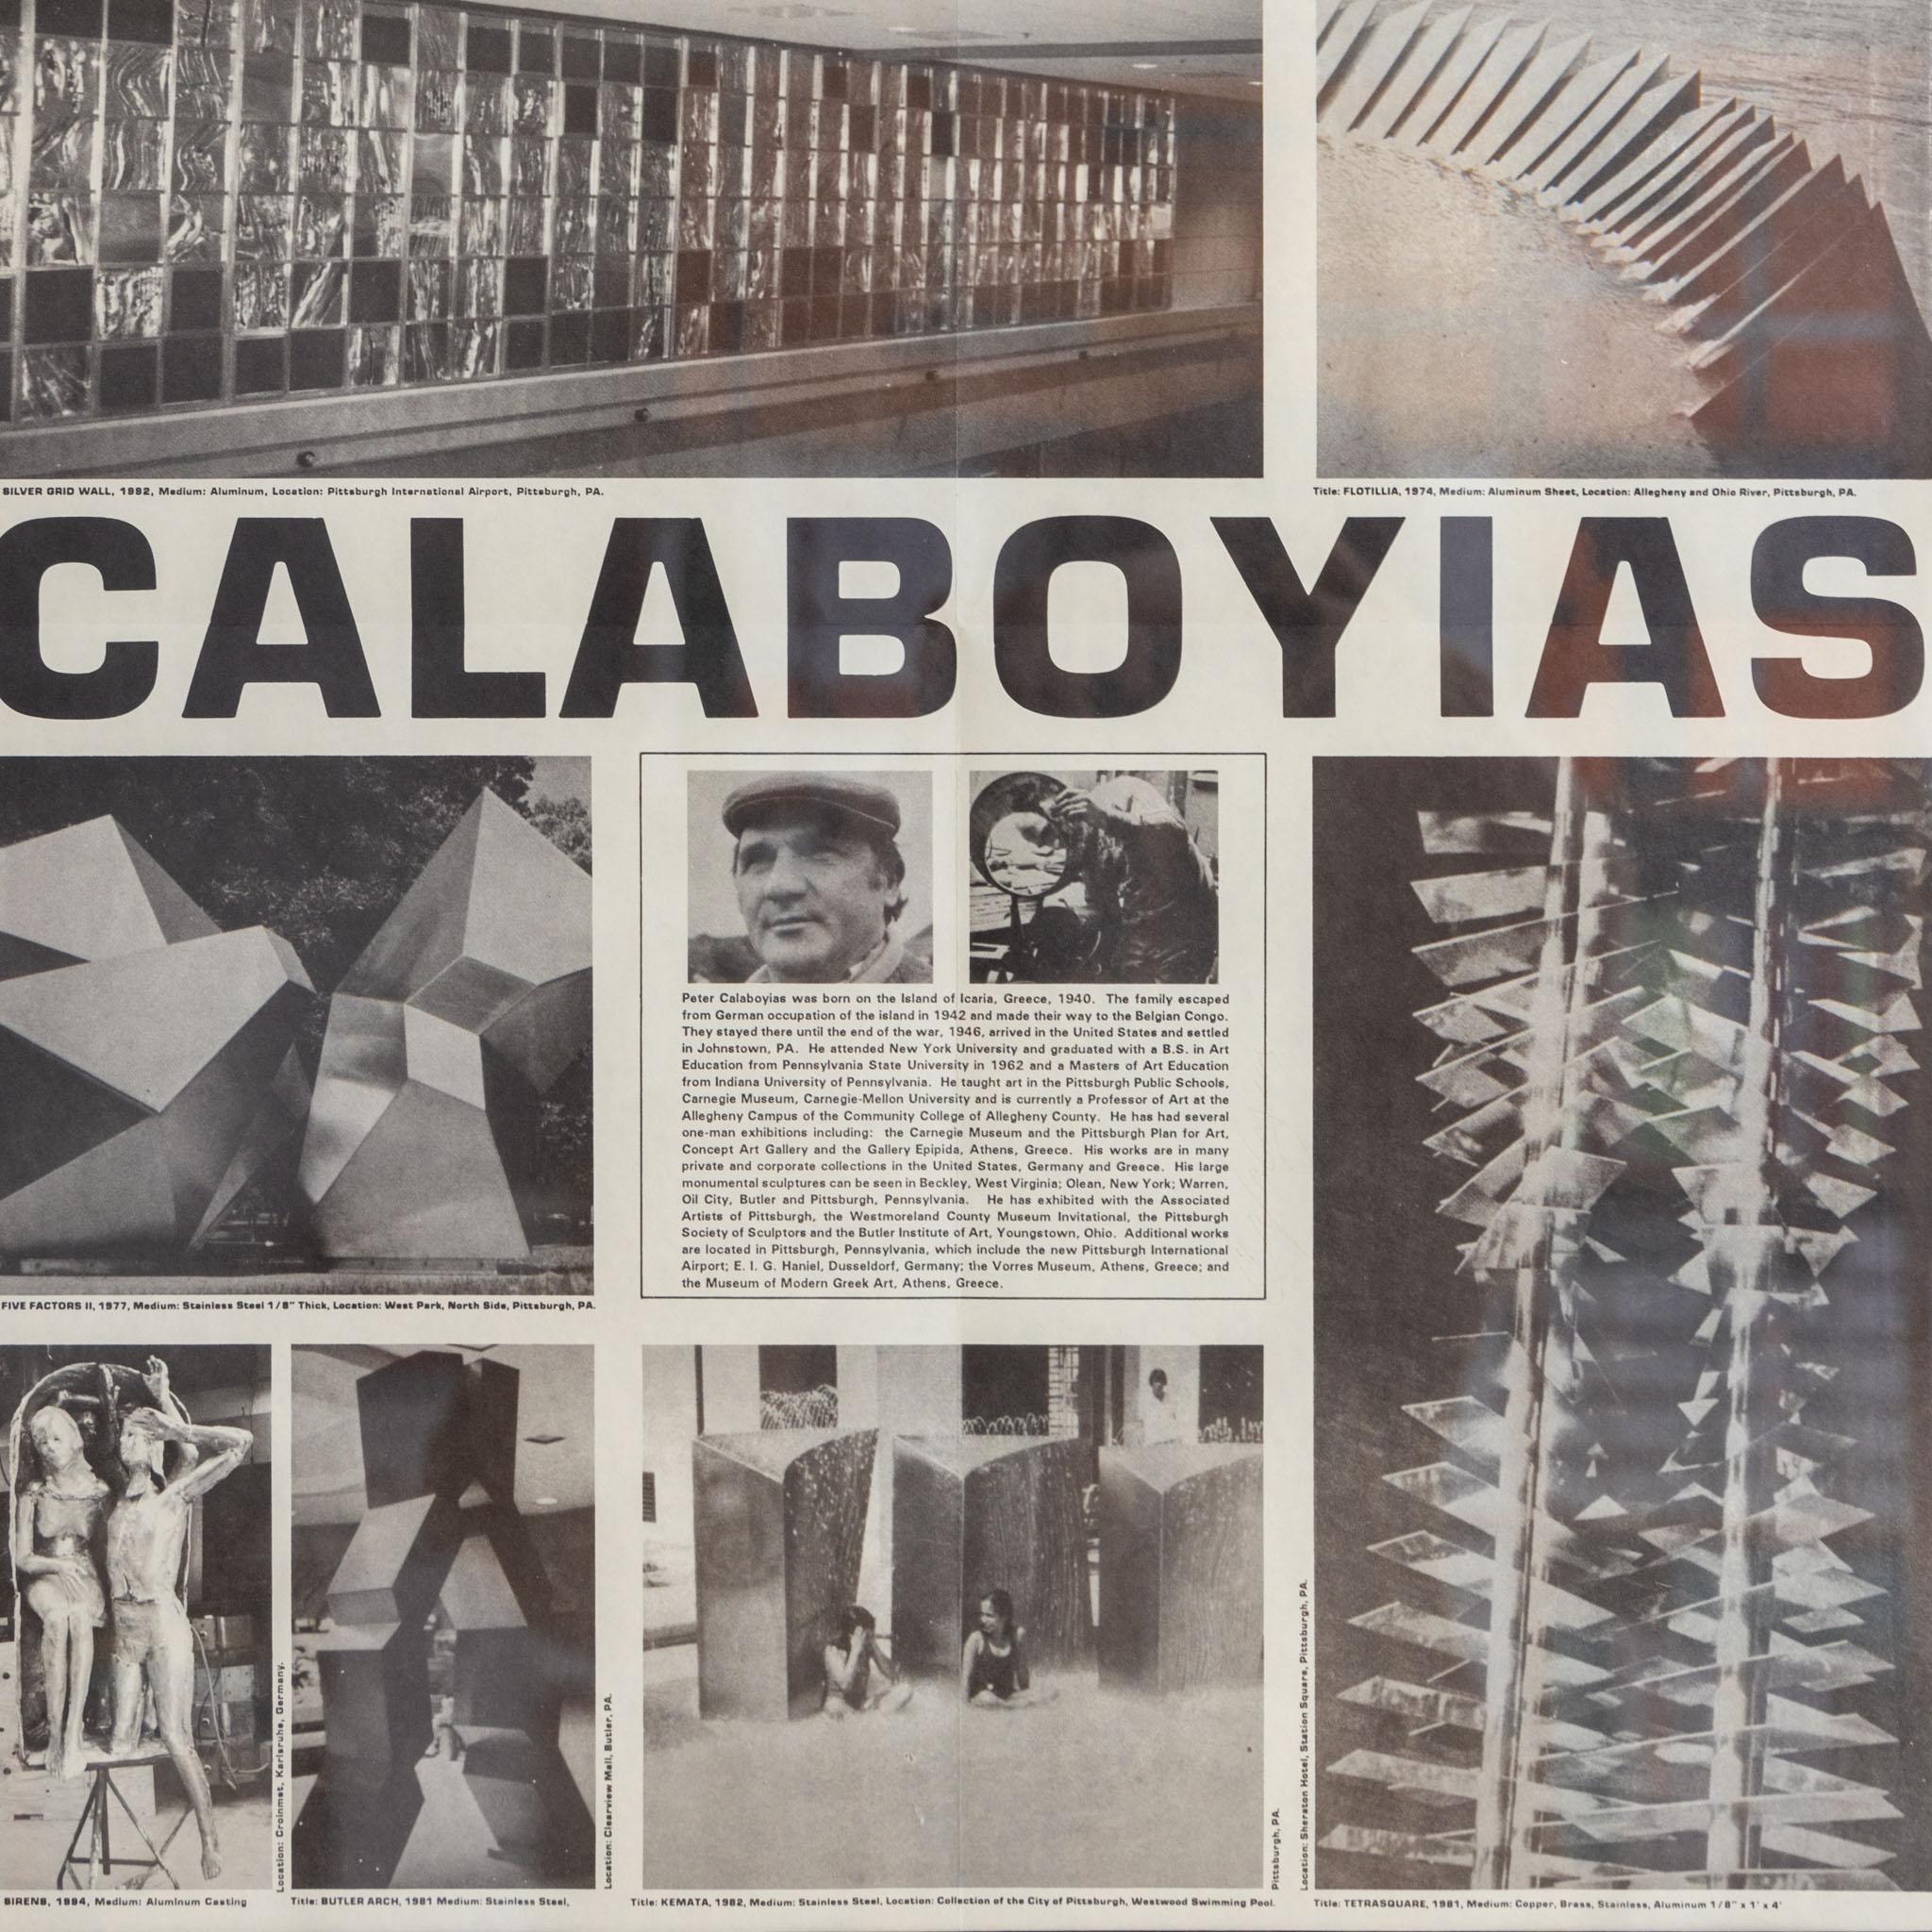 Fin du 20e siècle Peter Calaboyias, Sirens, aluminium coulé, 1994